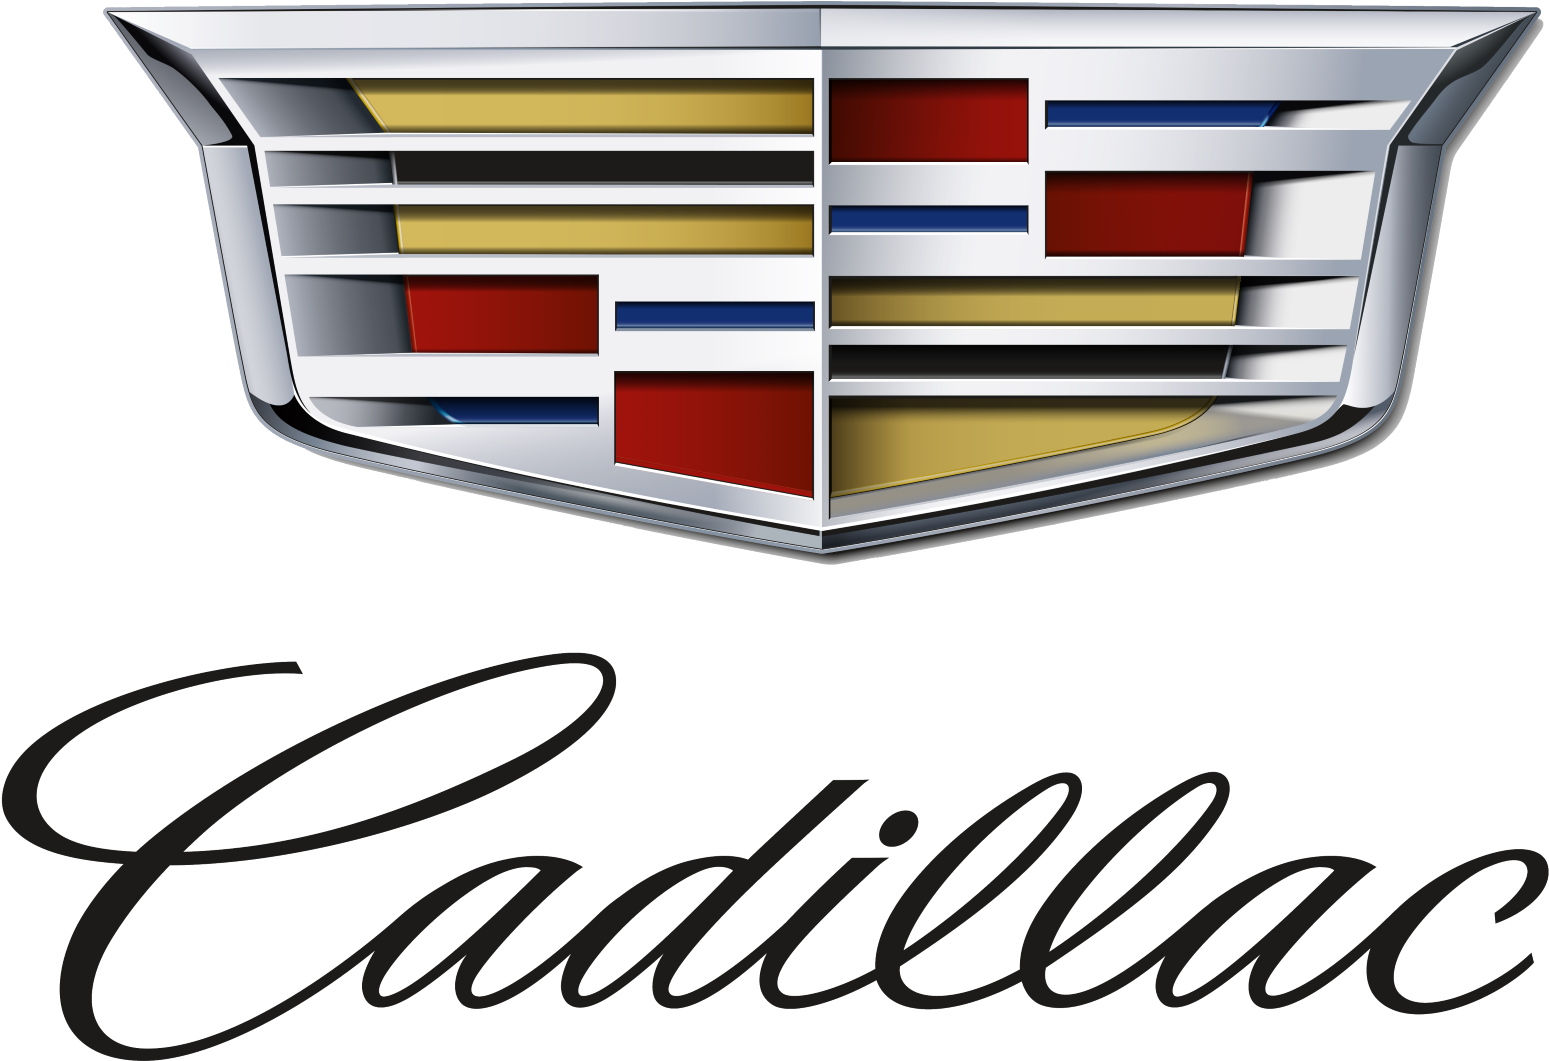 Cadillac Logo - Marque De Voiture Americaine (1920x1080)